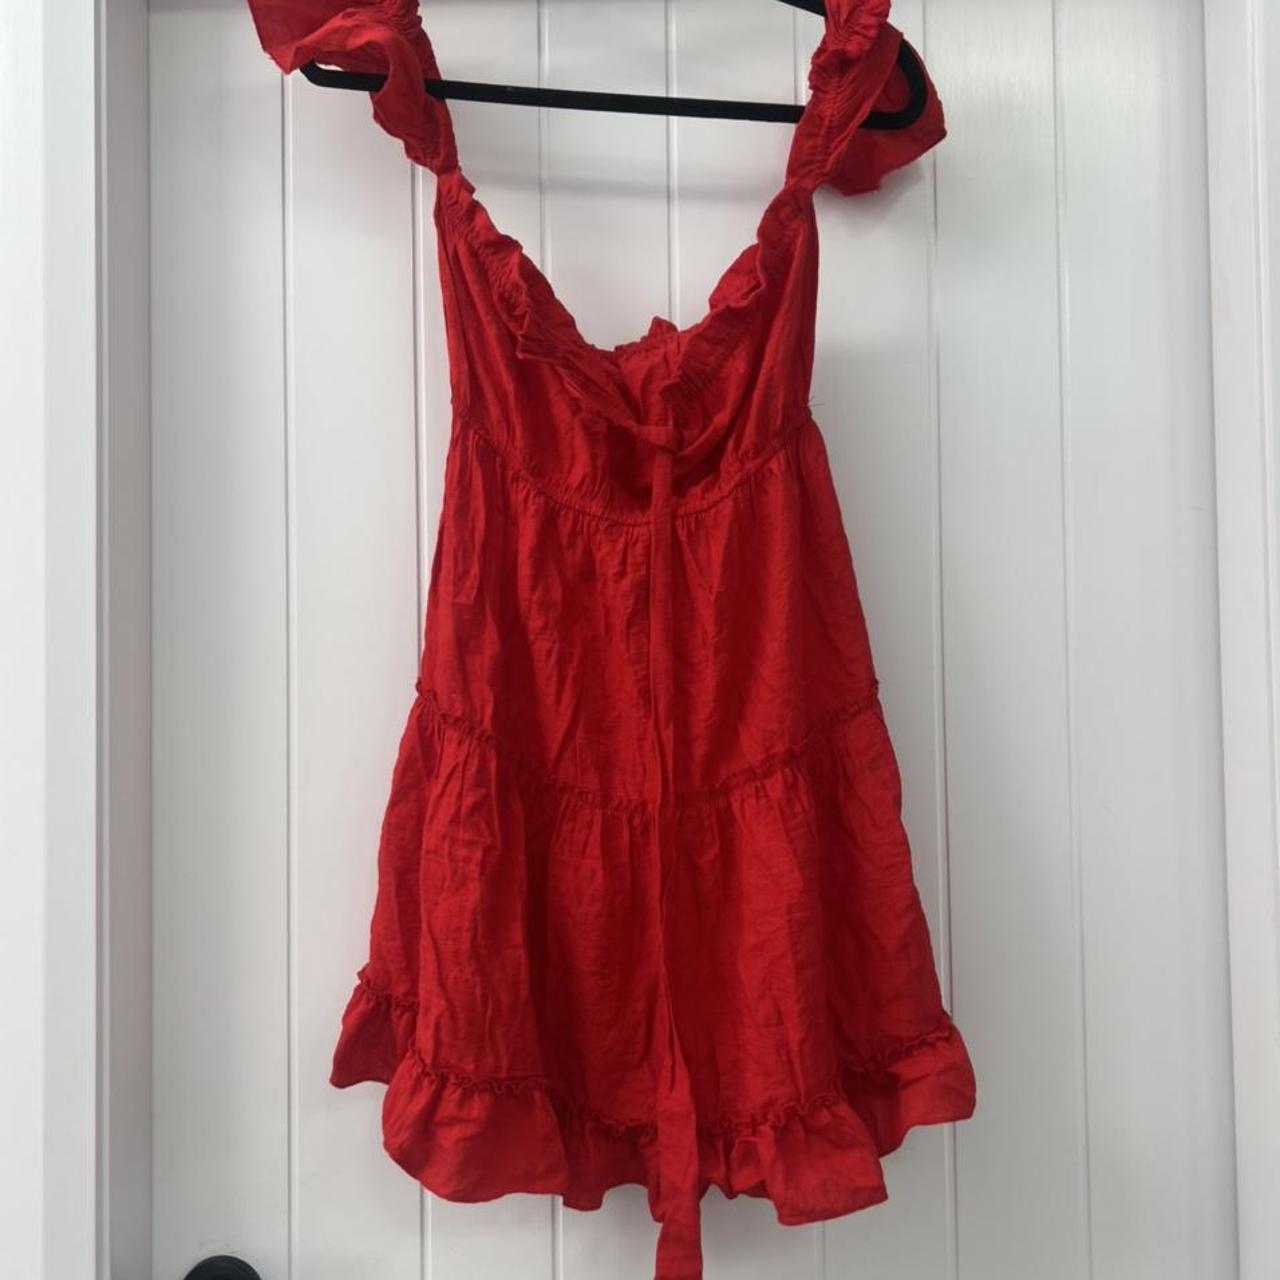 Glassons Mini dress red size small - Depop